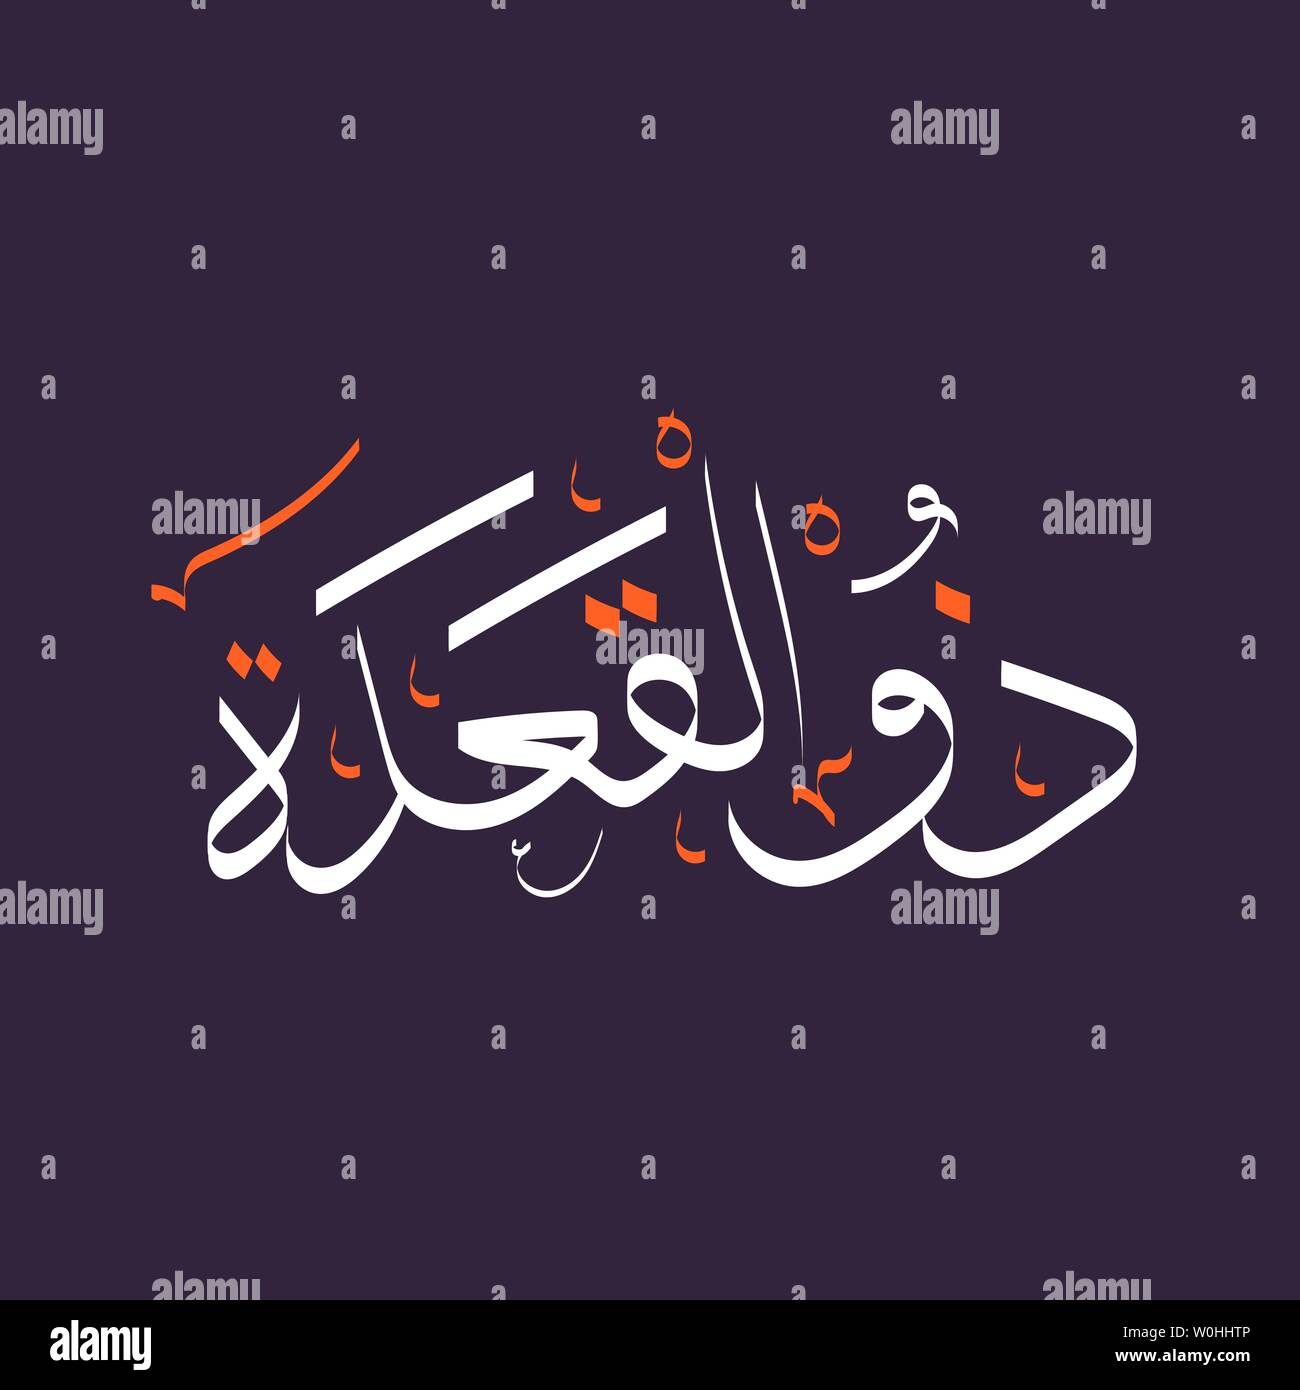 Arabic calligraphy text of Dhulqodah. Eleventh month Islamic Hijri Calendar in cute arabic calligraphy style Stock Vector